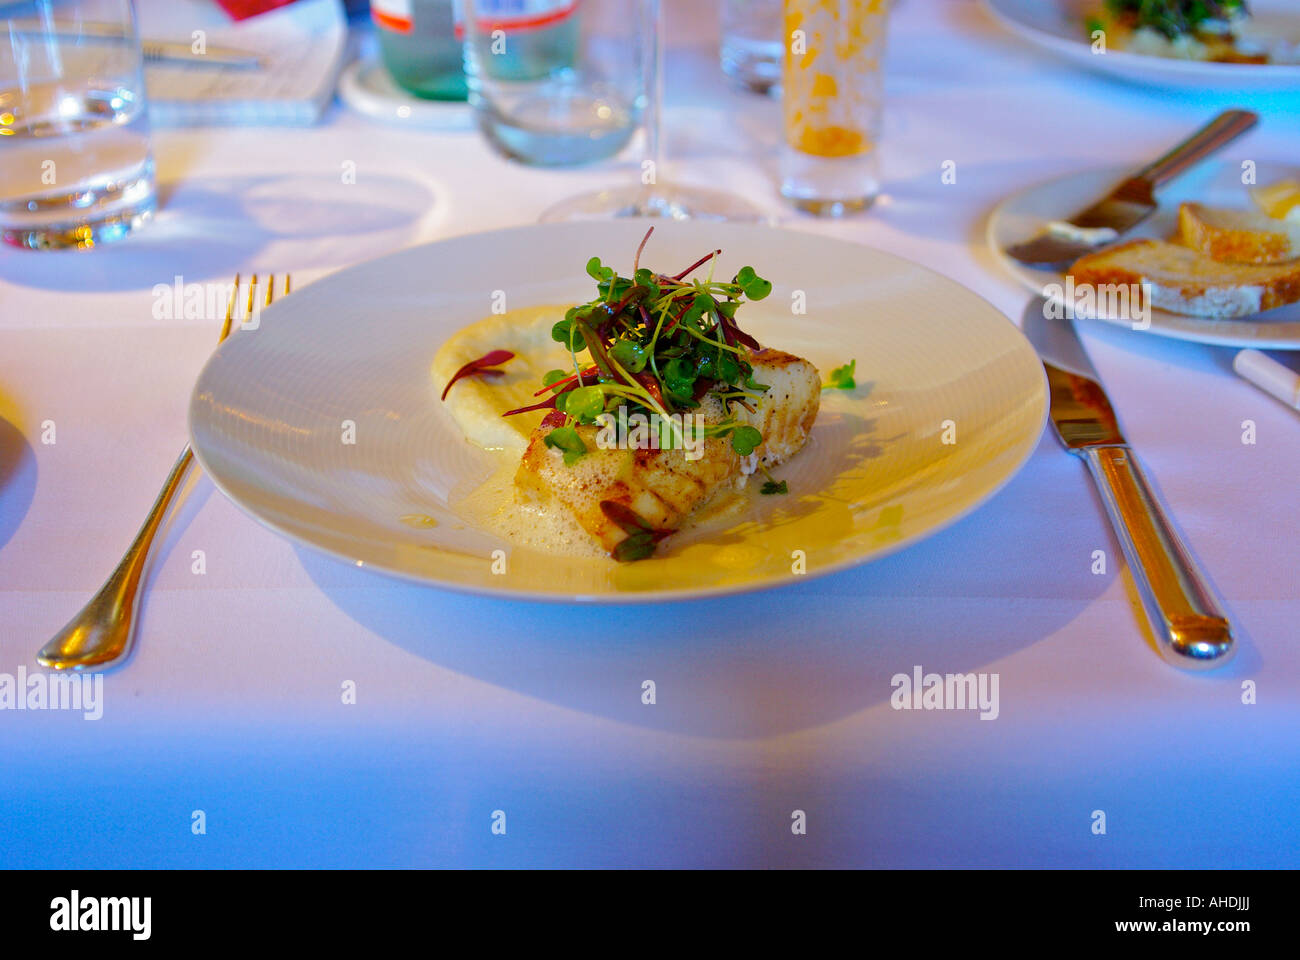 Grilled halibut entrée on a dinner plate Stock Photo